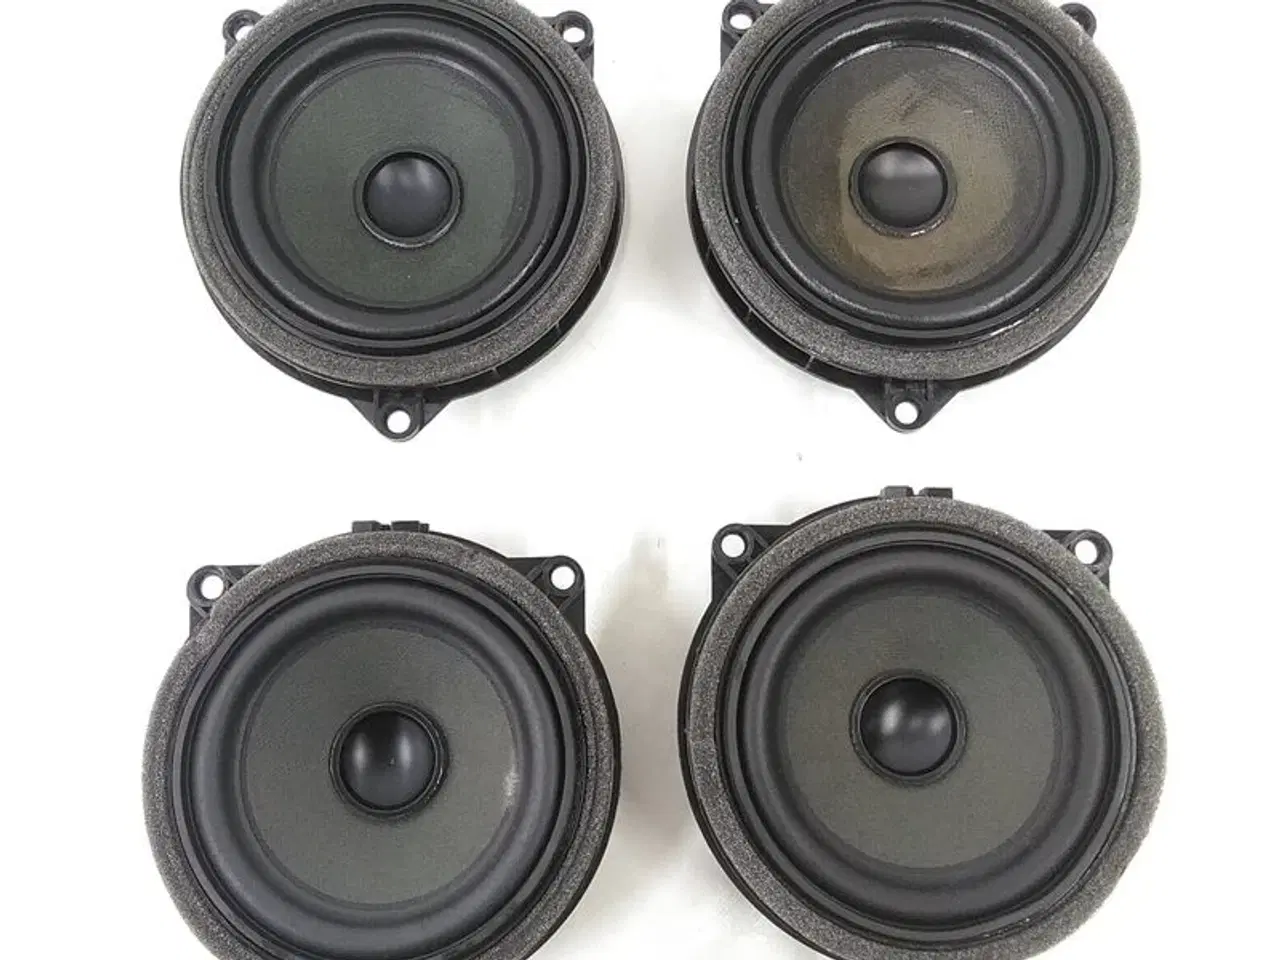 Billede 20 - højtaler sæt til S676A HiFi speaker system K23814 F30 F31 F34GT F32 F33 F35 F36 F80 M3 F82 M4 F83 M4 cabriolet F30 LCI F31 LCI F80 LCI M3 F35 LCI F34